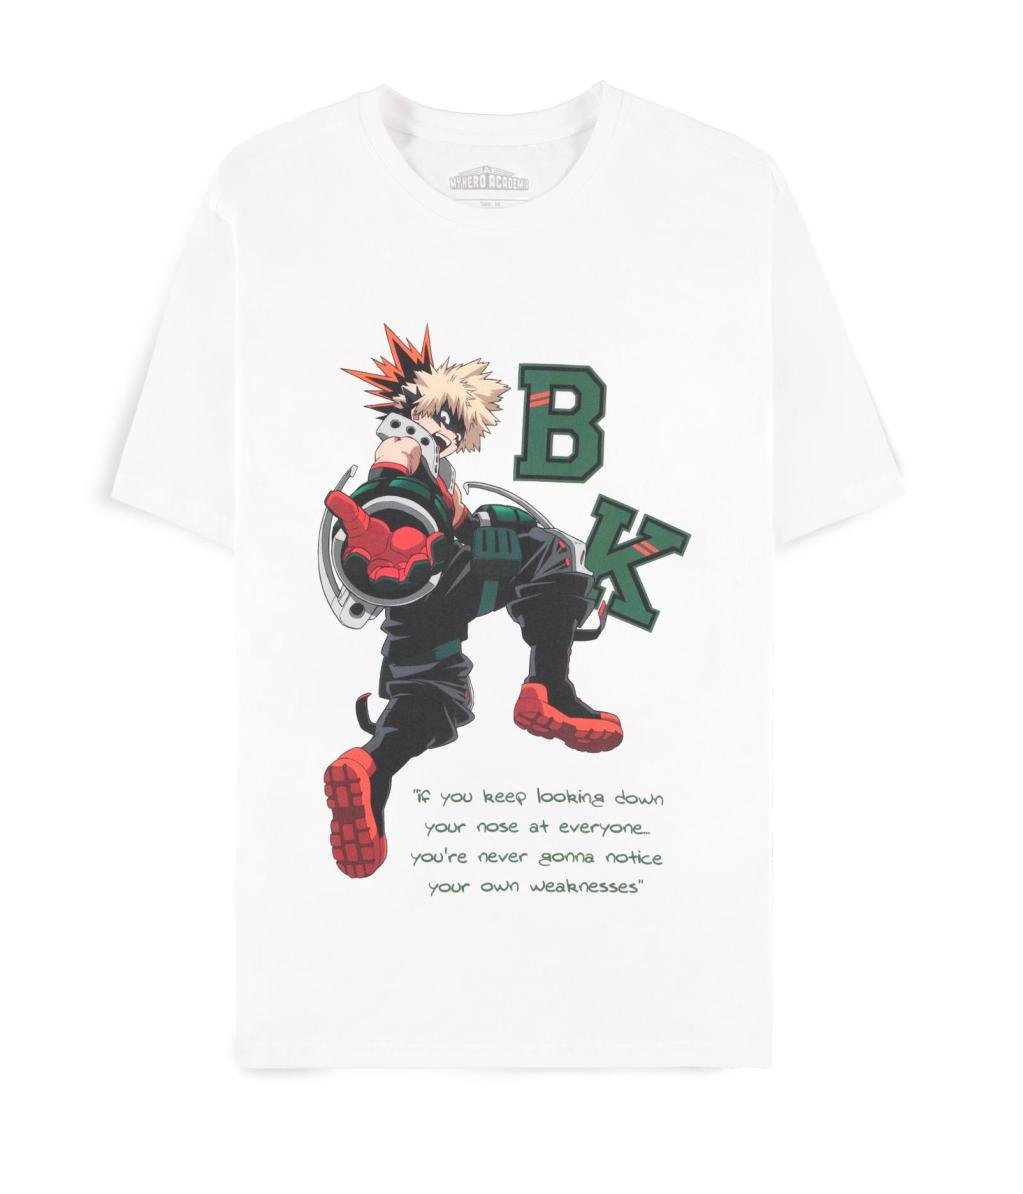 MY HERO ACADEMIA - Bakugo Quote - Men's T-shirt (2XL)